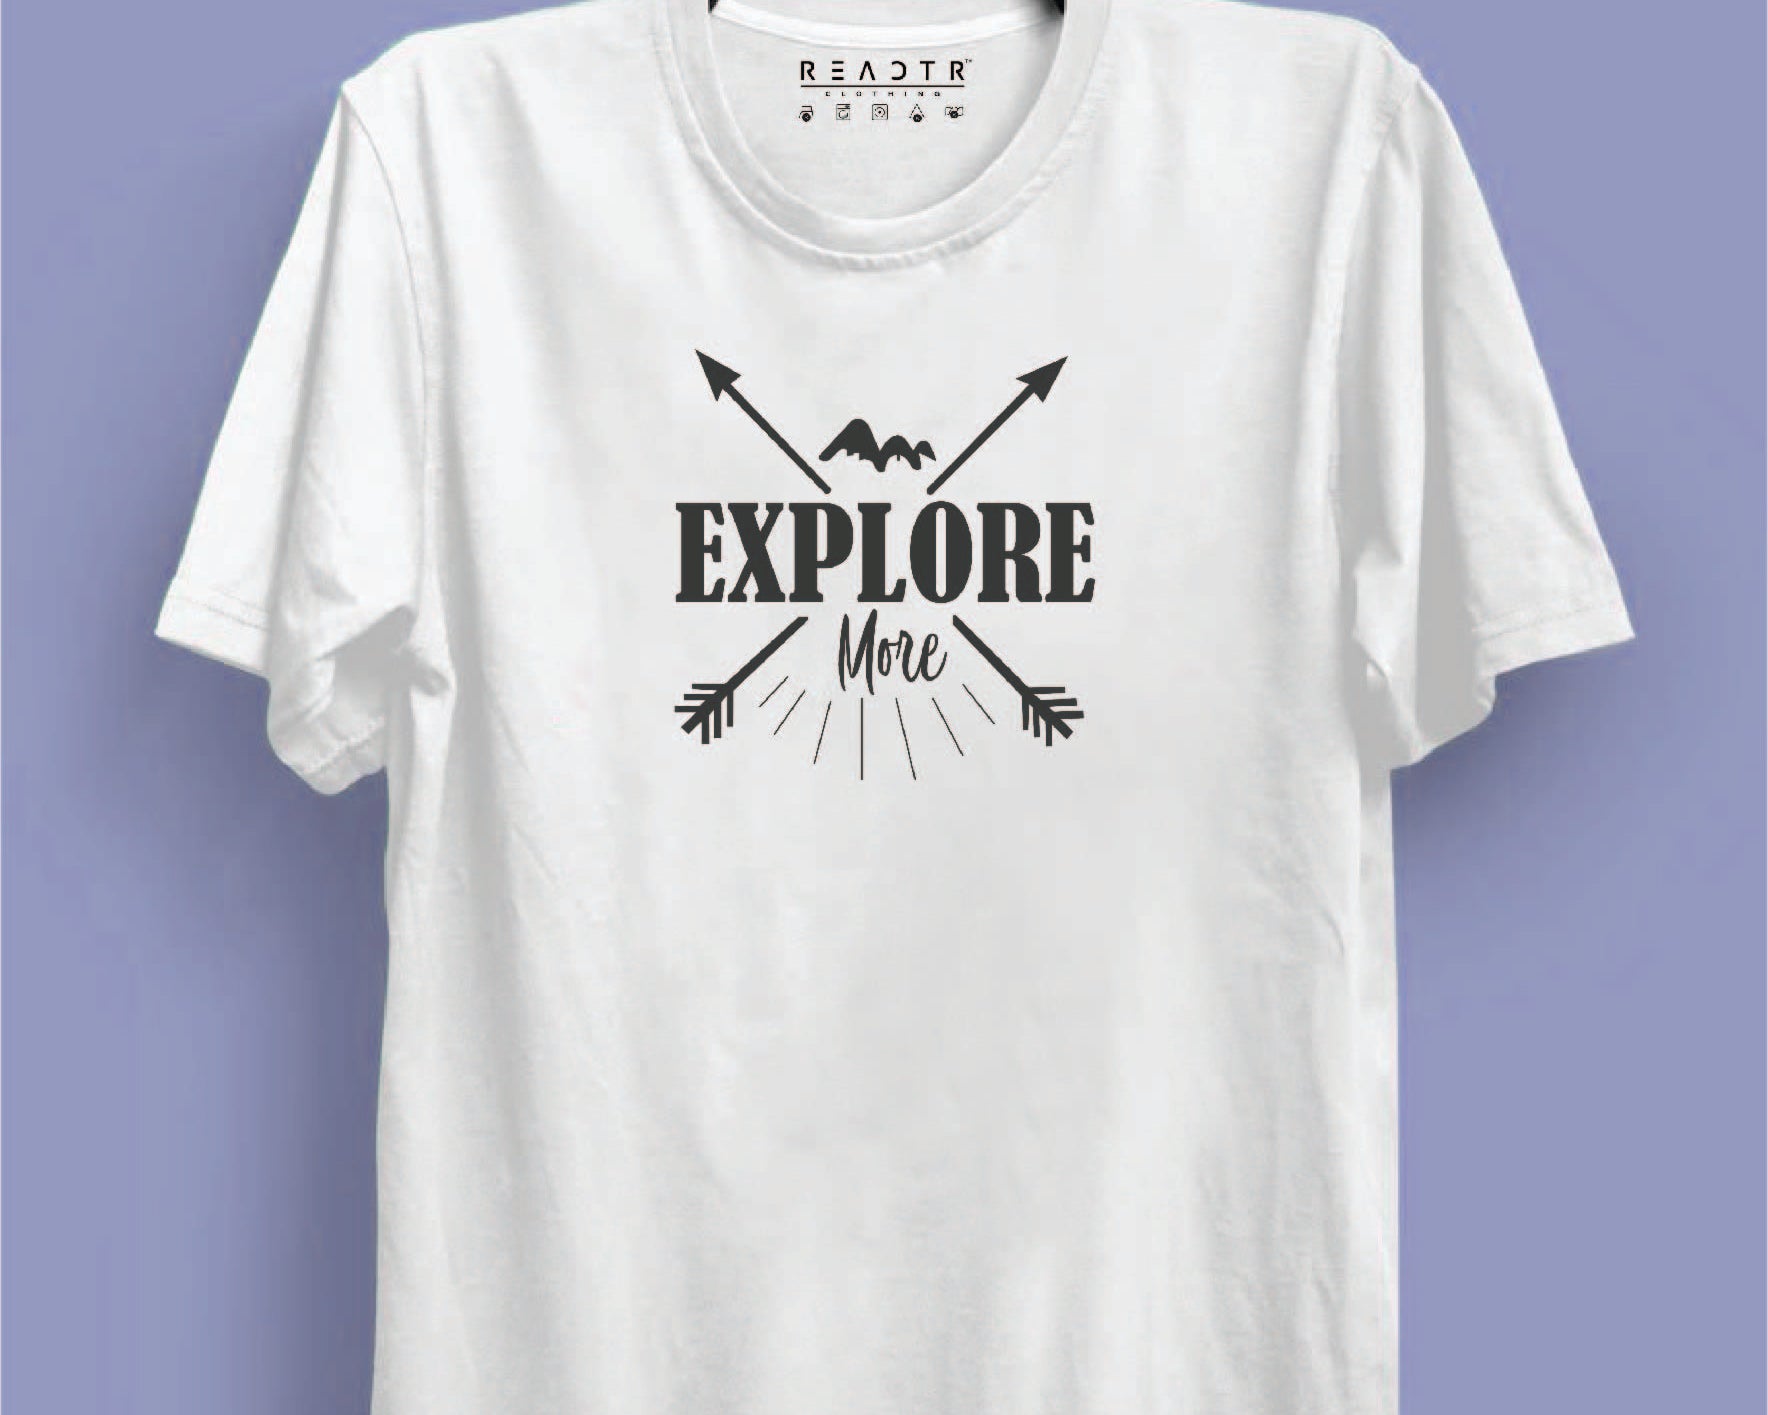 Explore more Reactr Tshirts For Men - Eyewearlabs